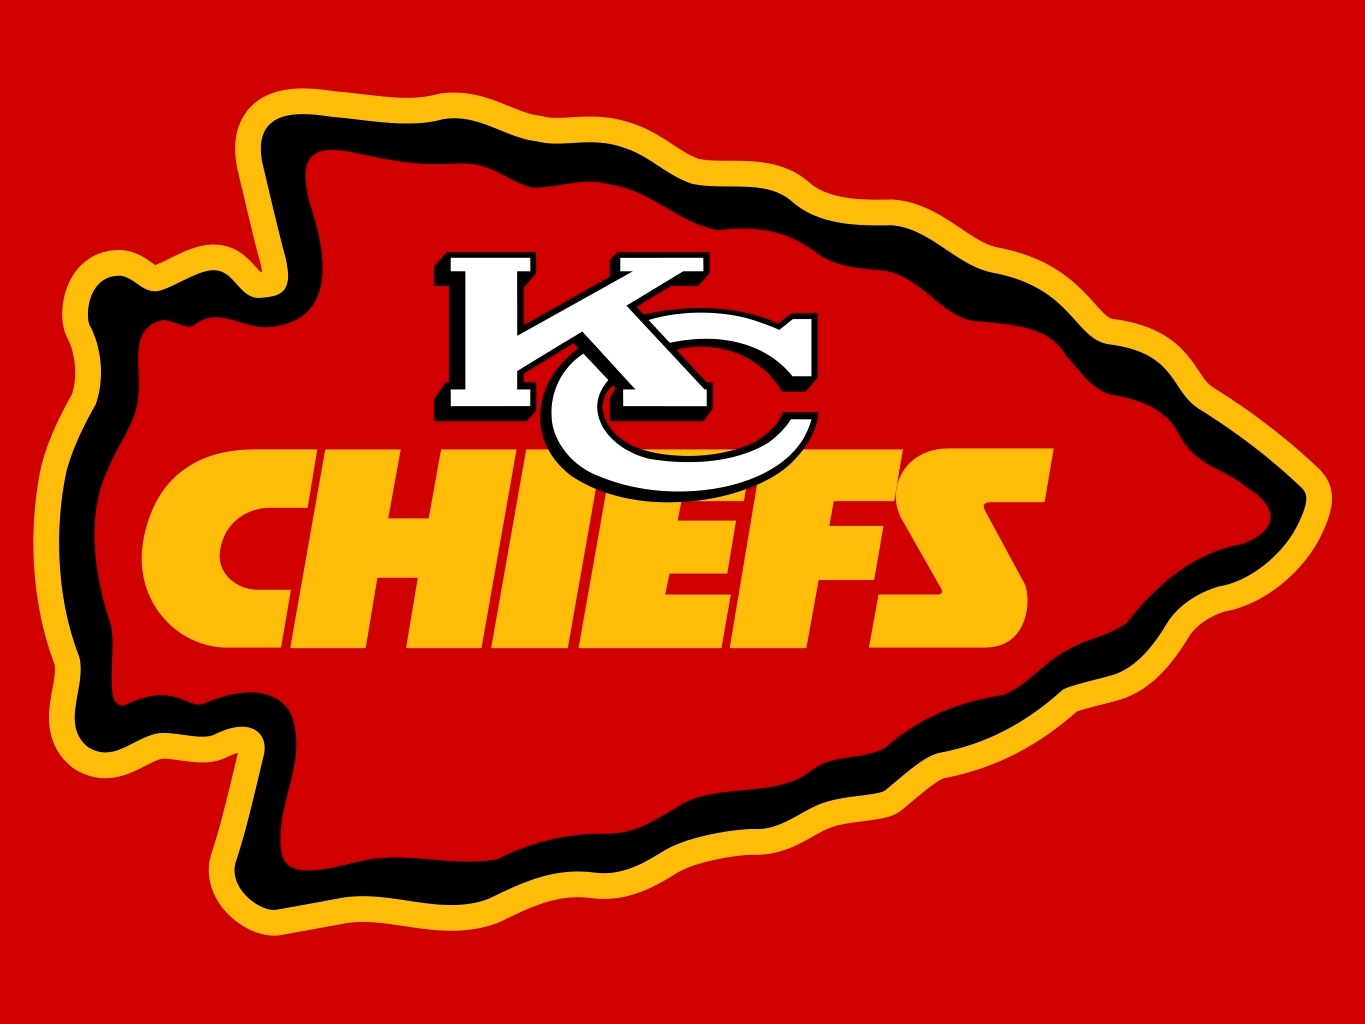 Kansas City Chiefs Backgrounds On Wallpapers Vista - Red Kc Chiefs Logo ...